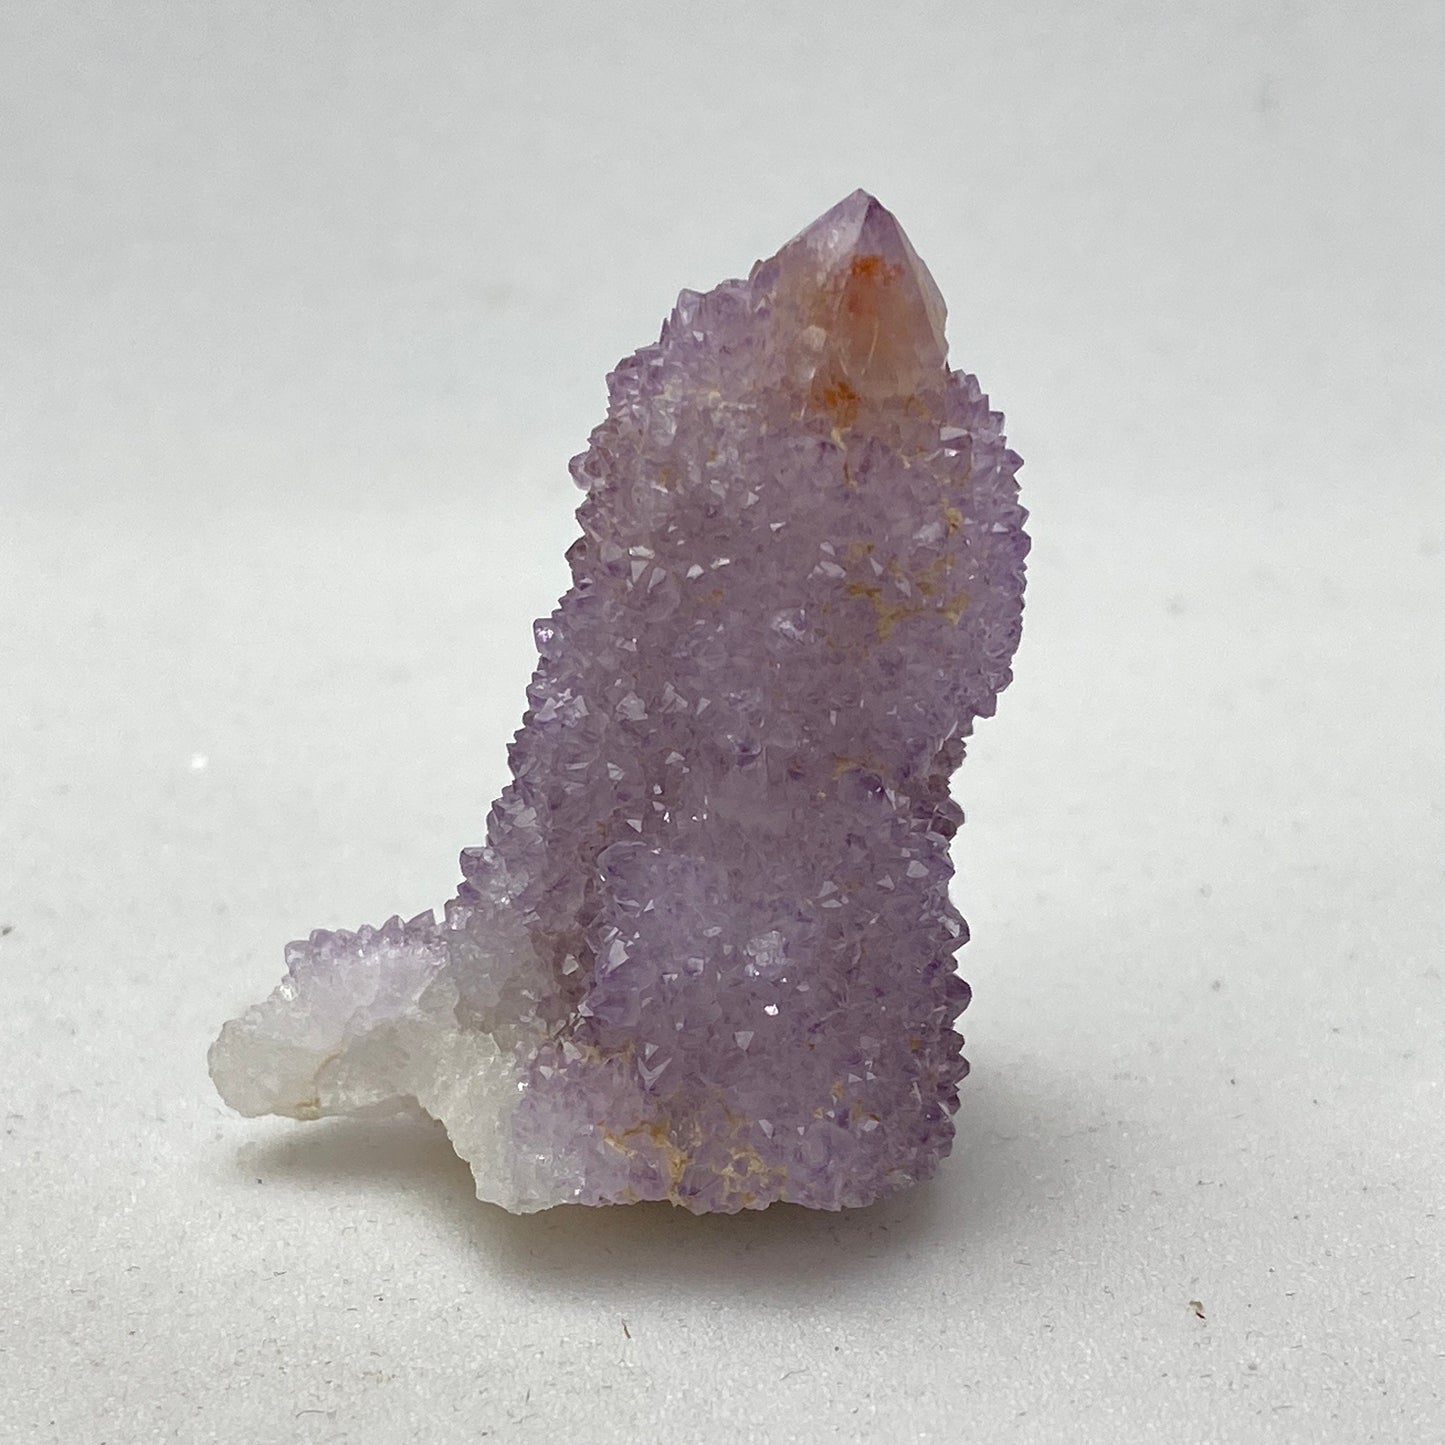 Spirit quartz cluster with citrine, amethyst